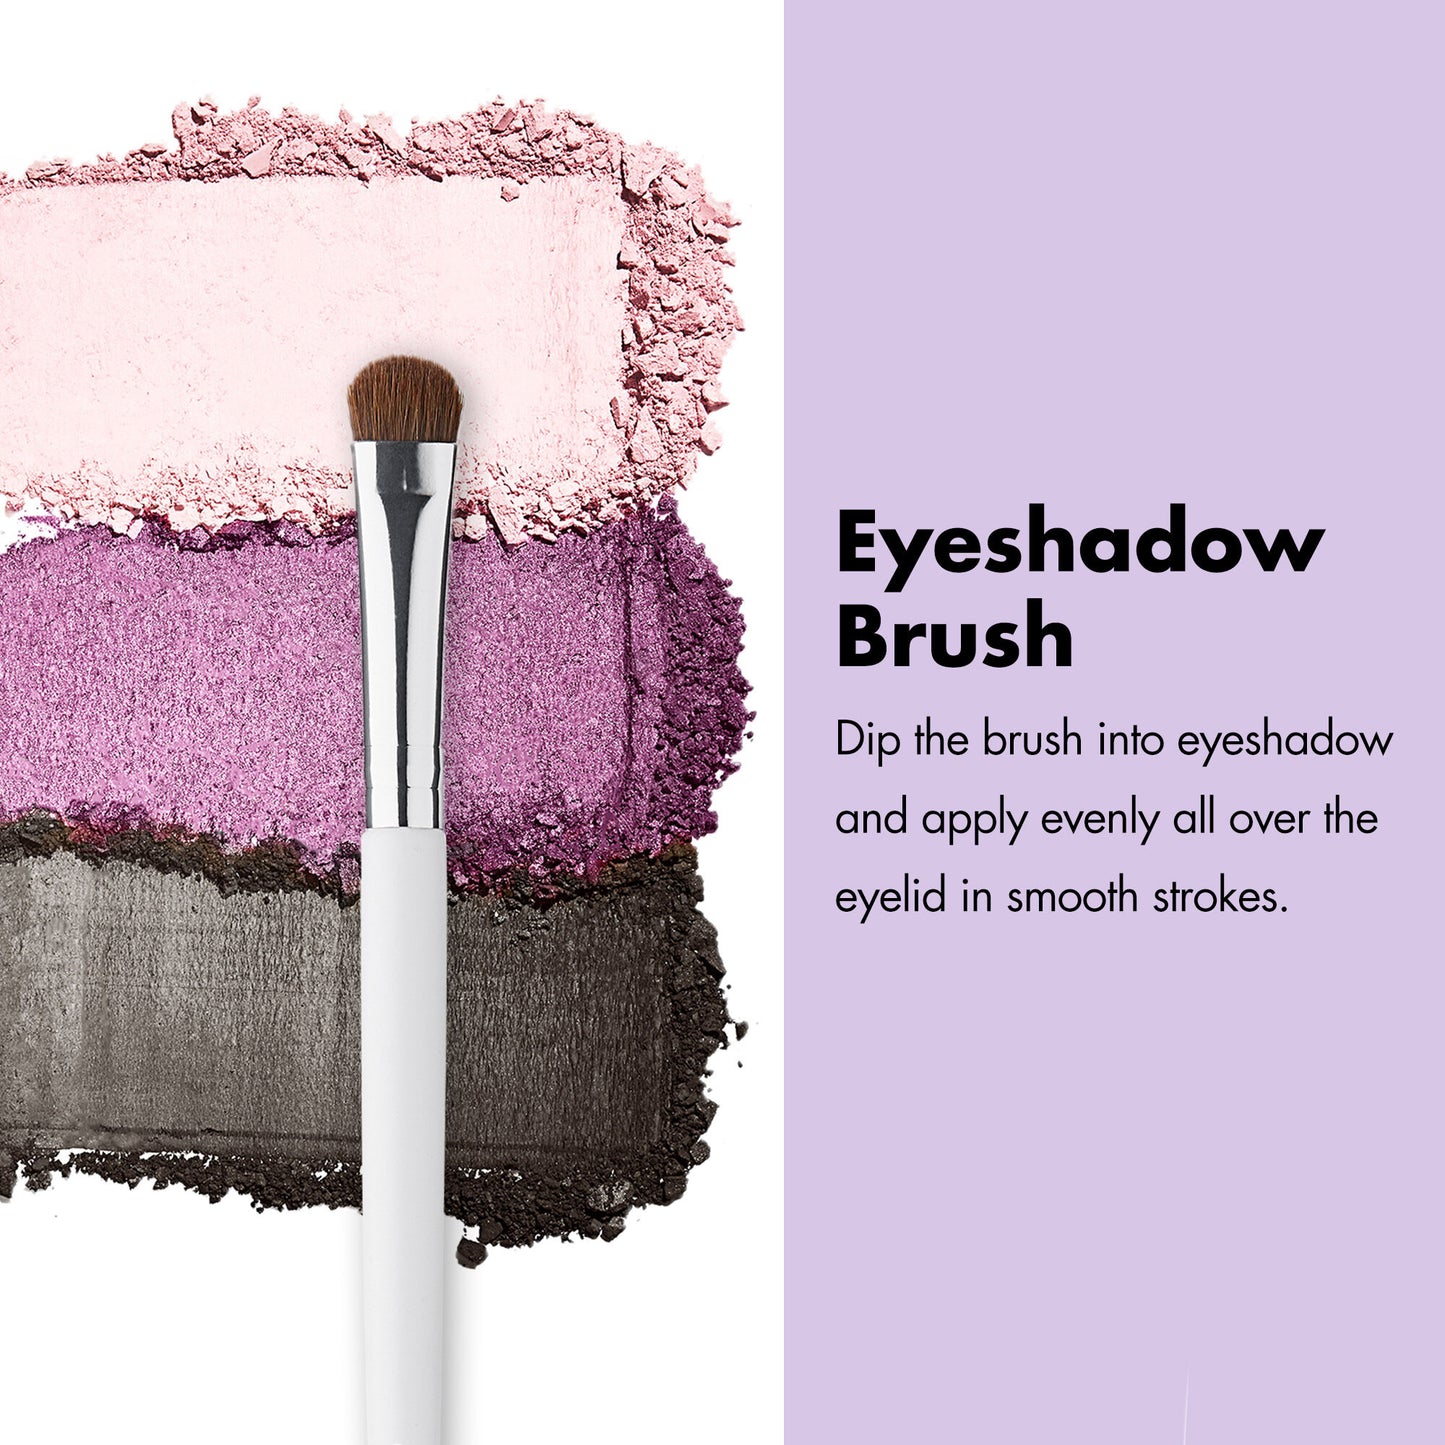 ELF | Makeup Brushes | Professional Set of 12